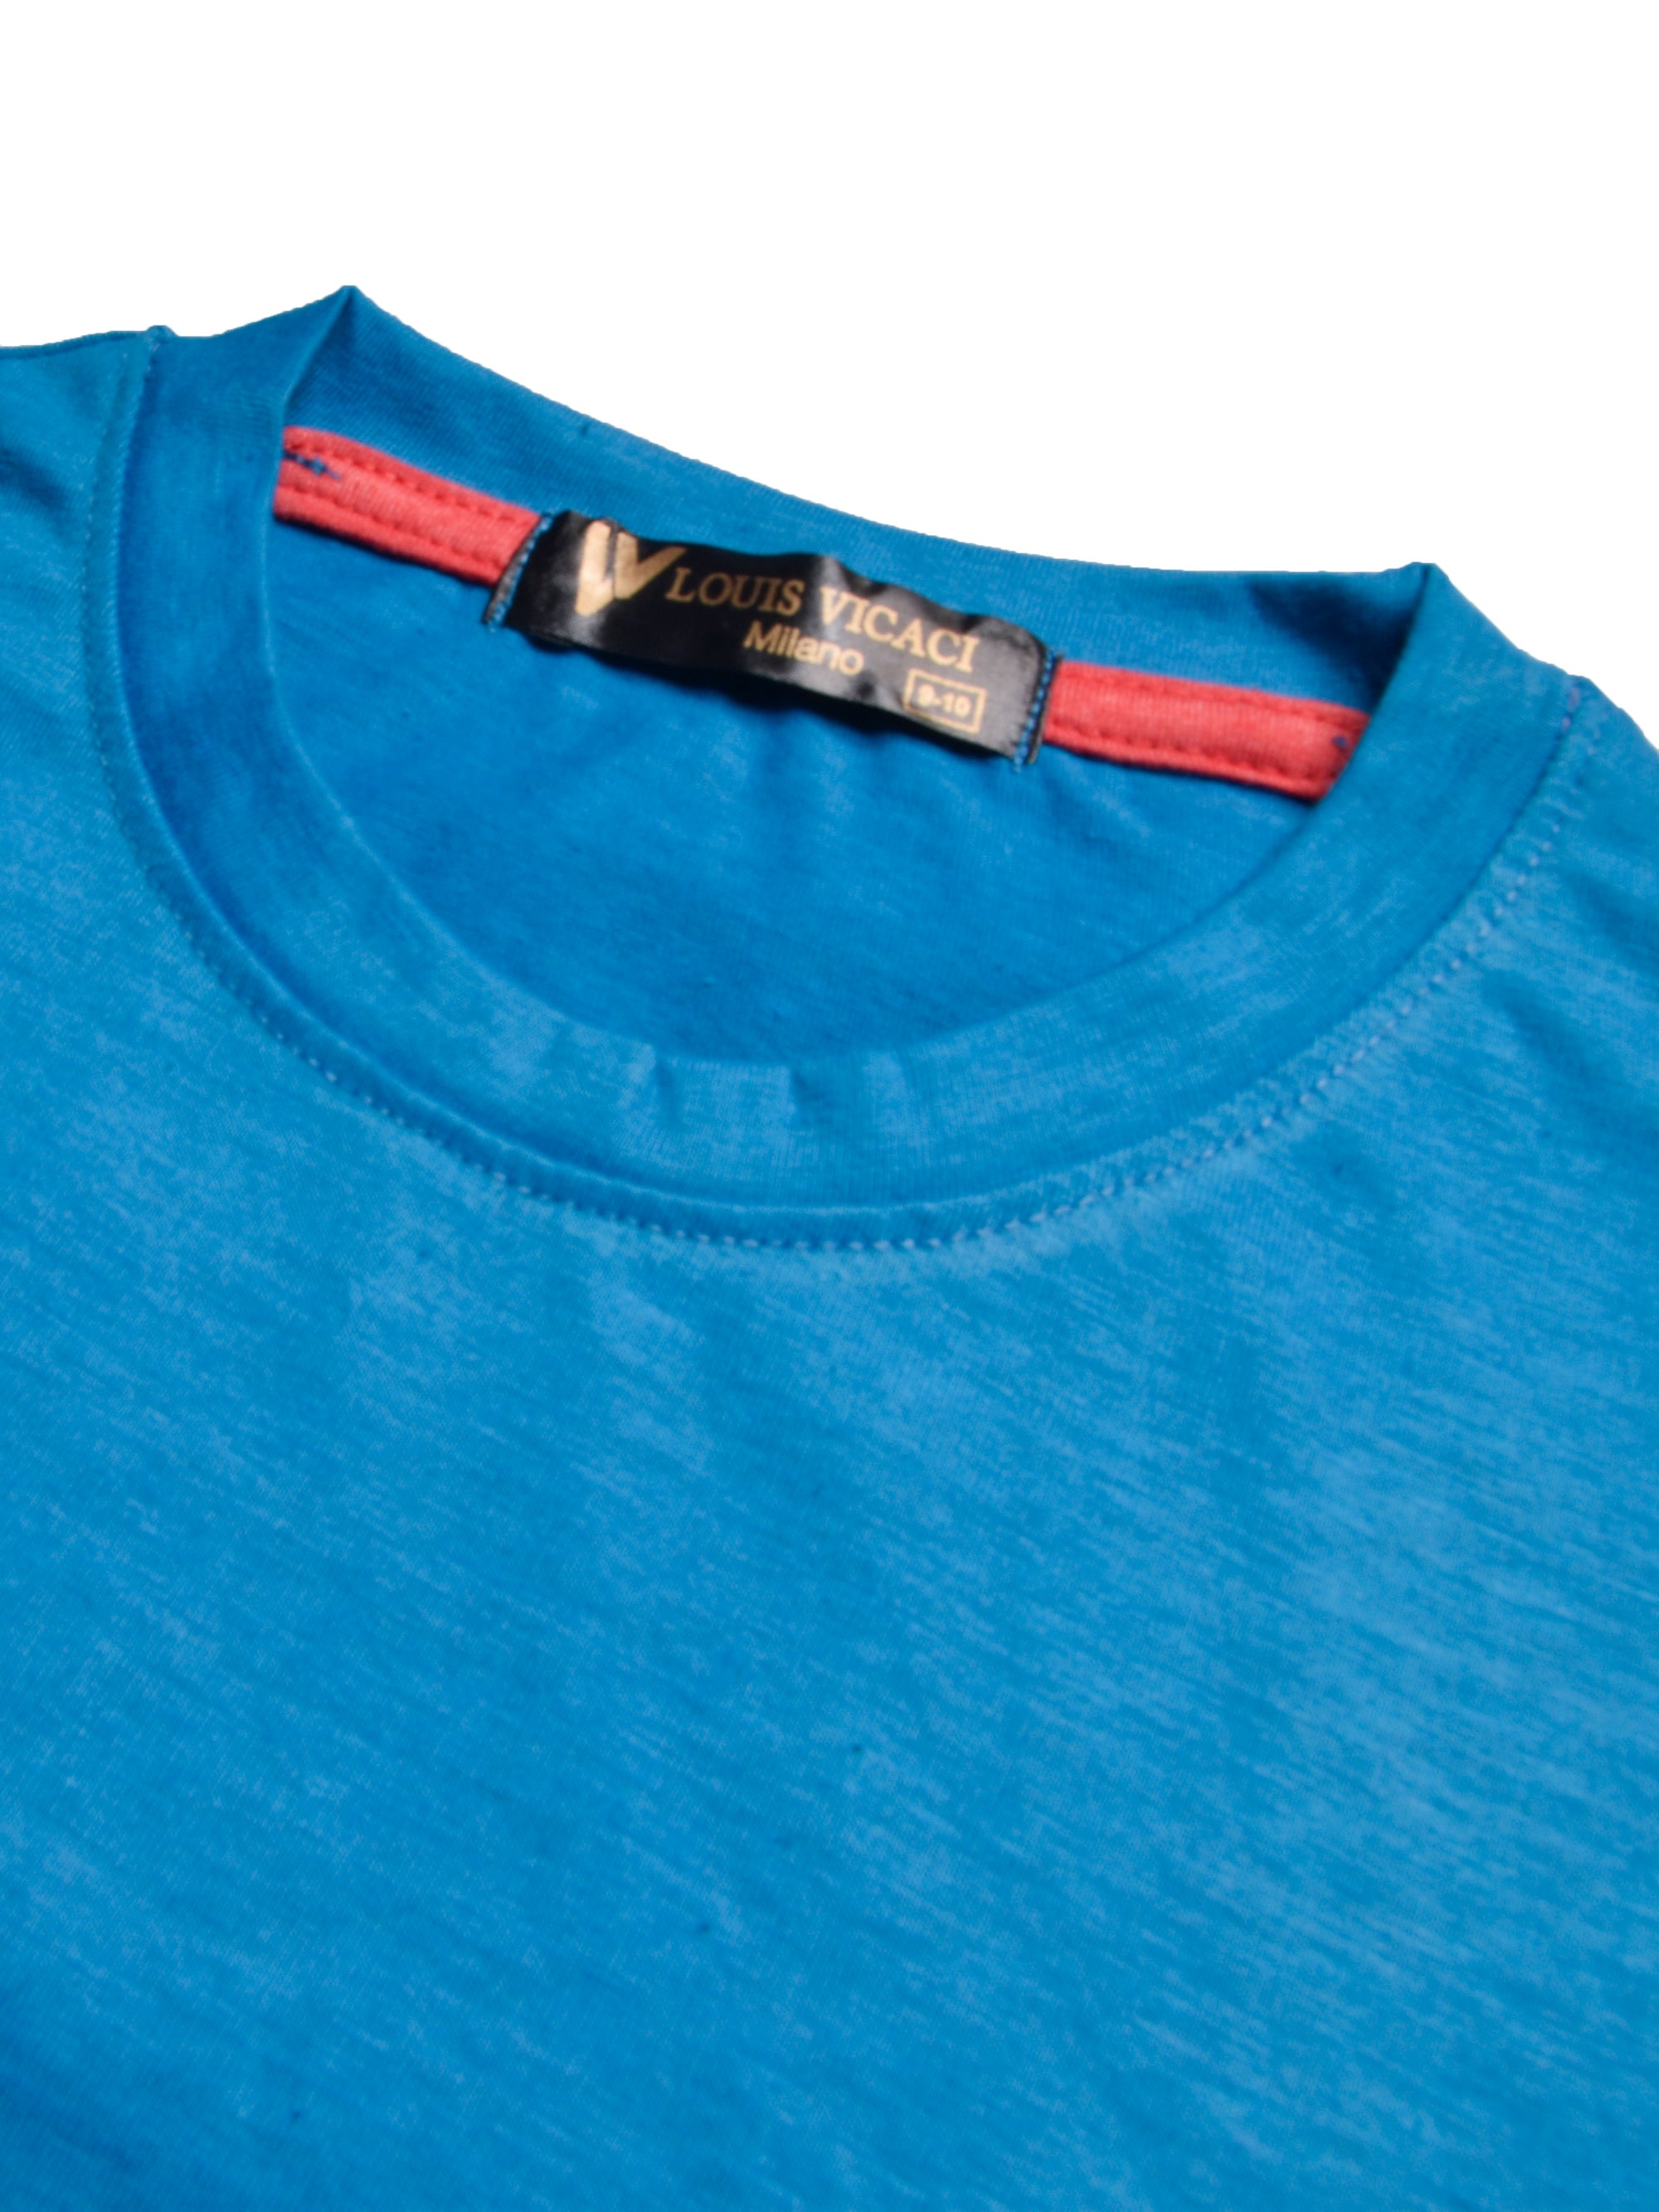 Louis Vicaci Single Jersey Tee Shirt For Kids-Dark Cyan-BE842/BR13081